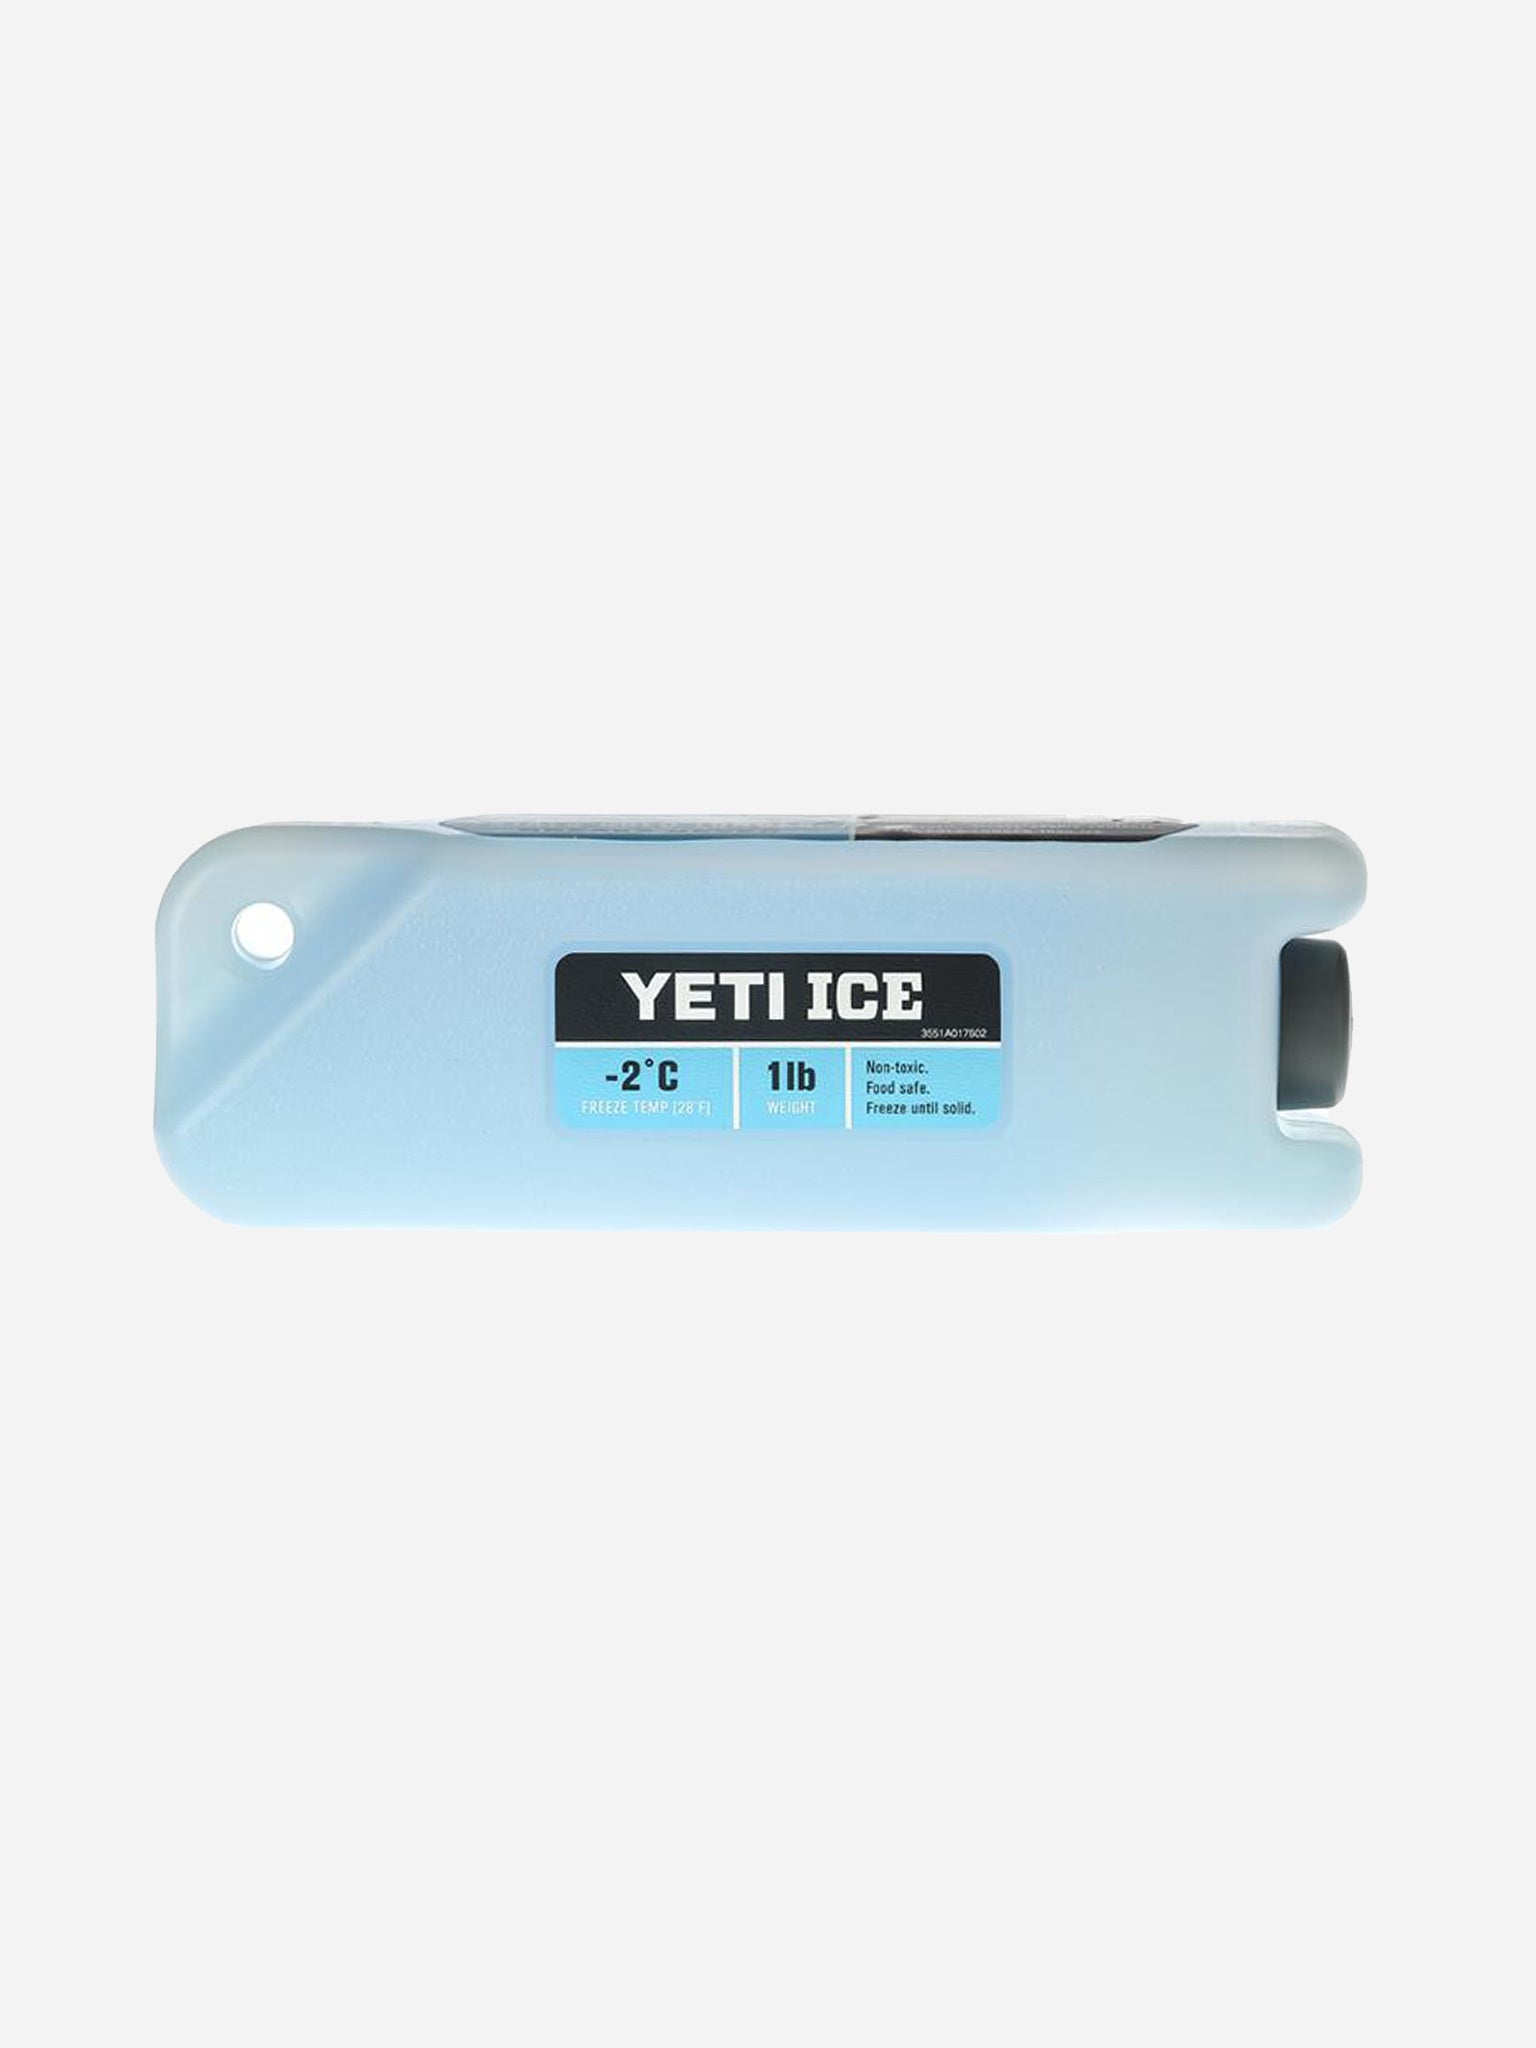 Yeti Ice - 2 lbs